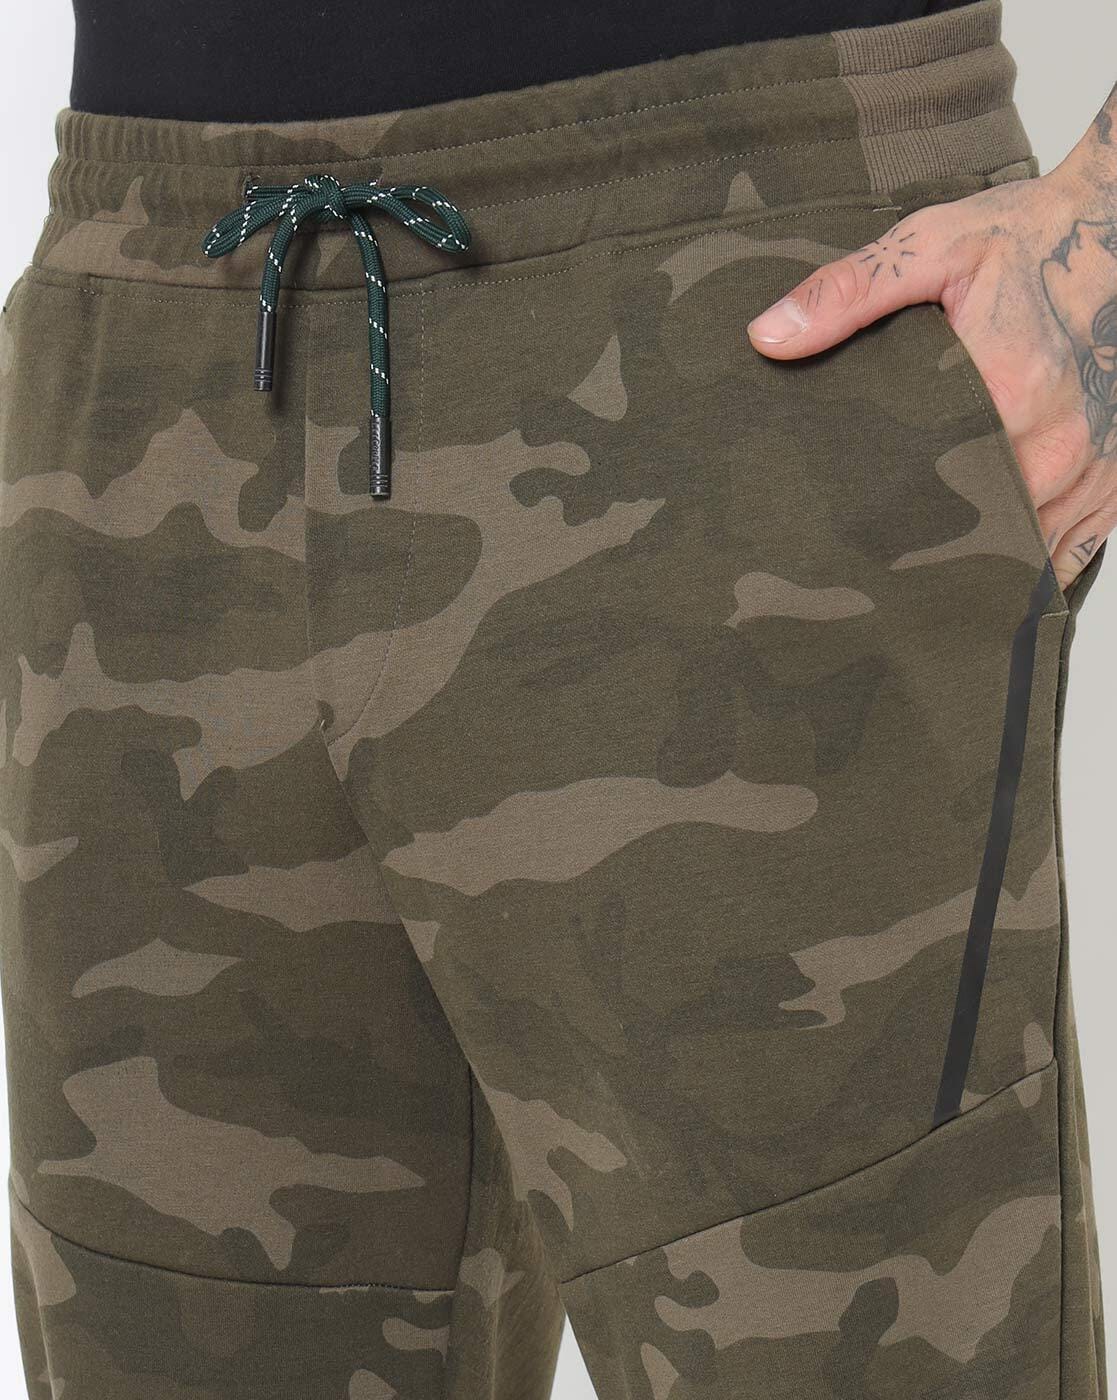 Camo Work Trousers With Knee Pads Online SAVE 39  pivphuketcom